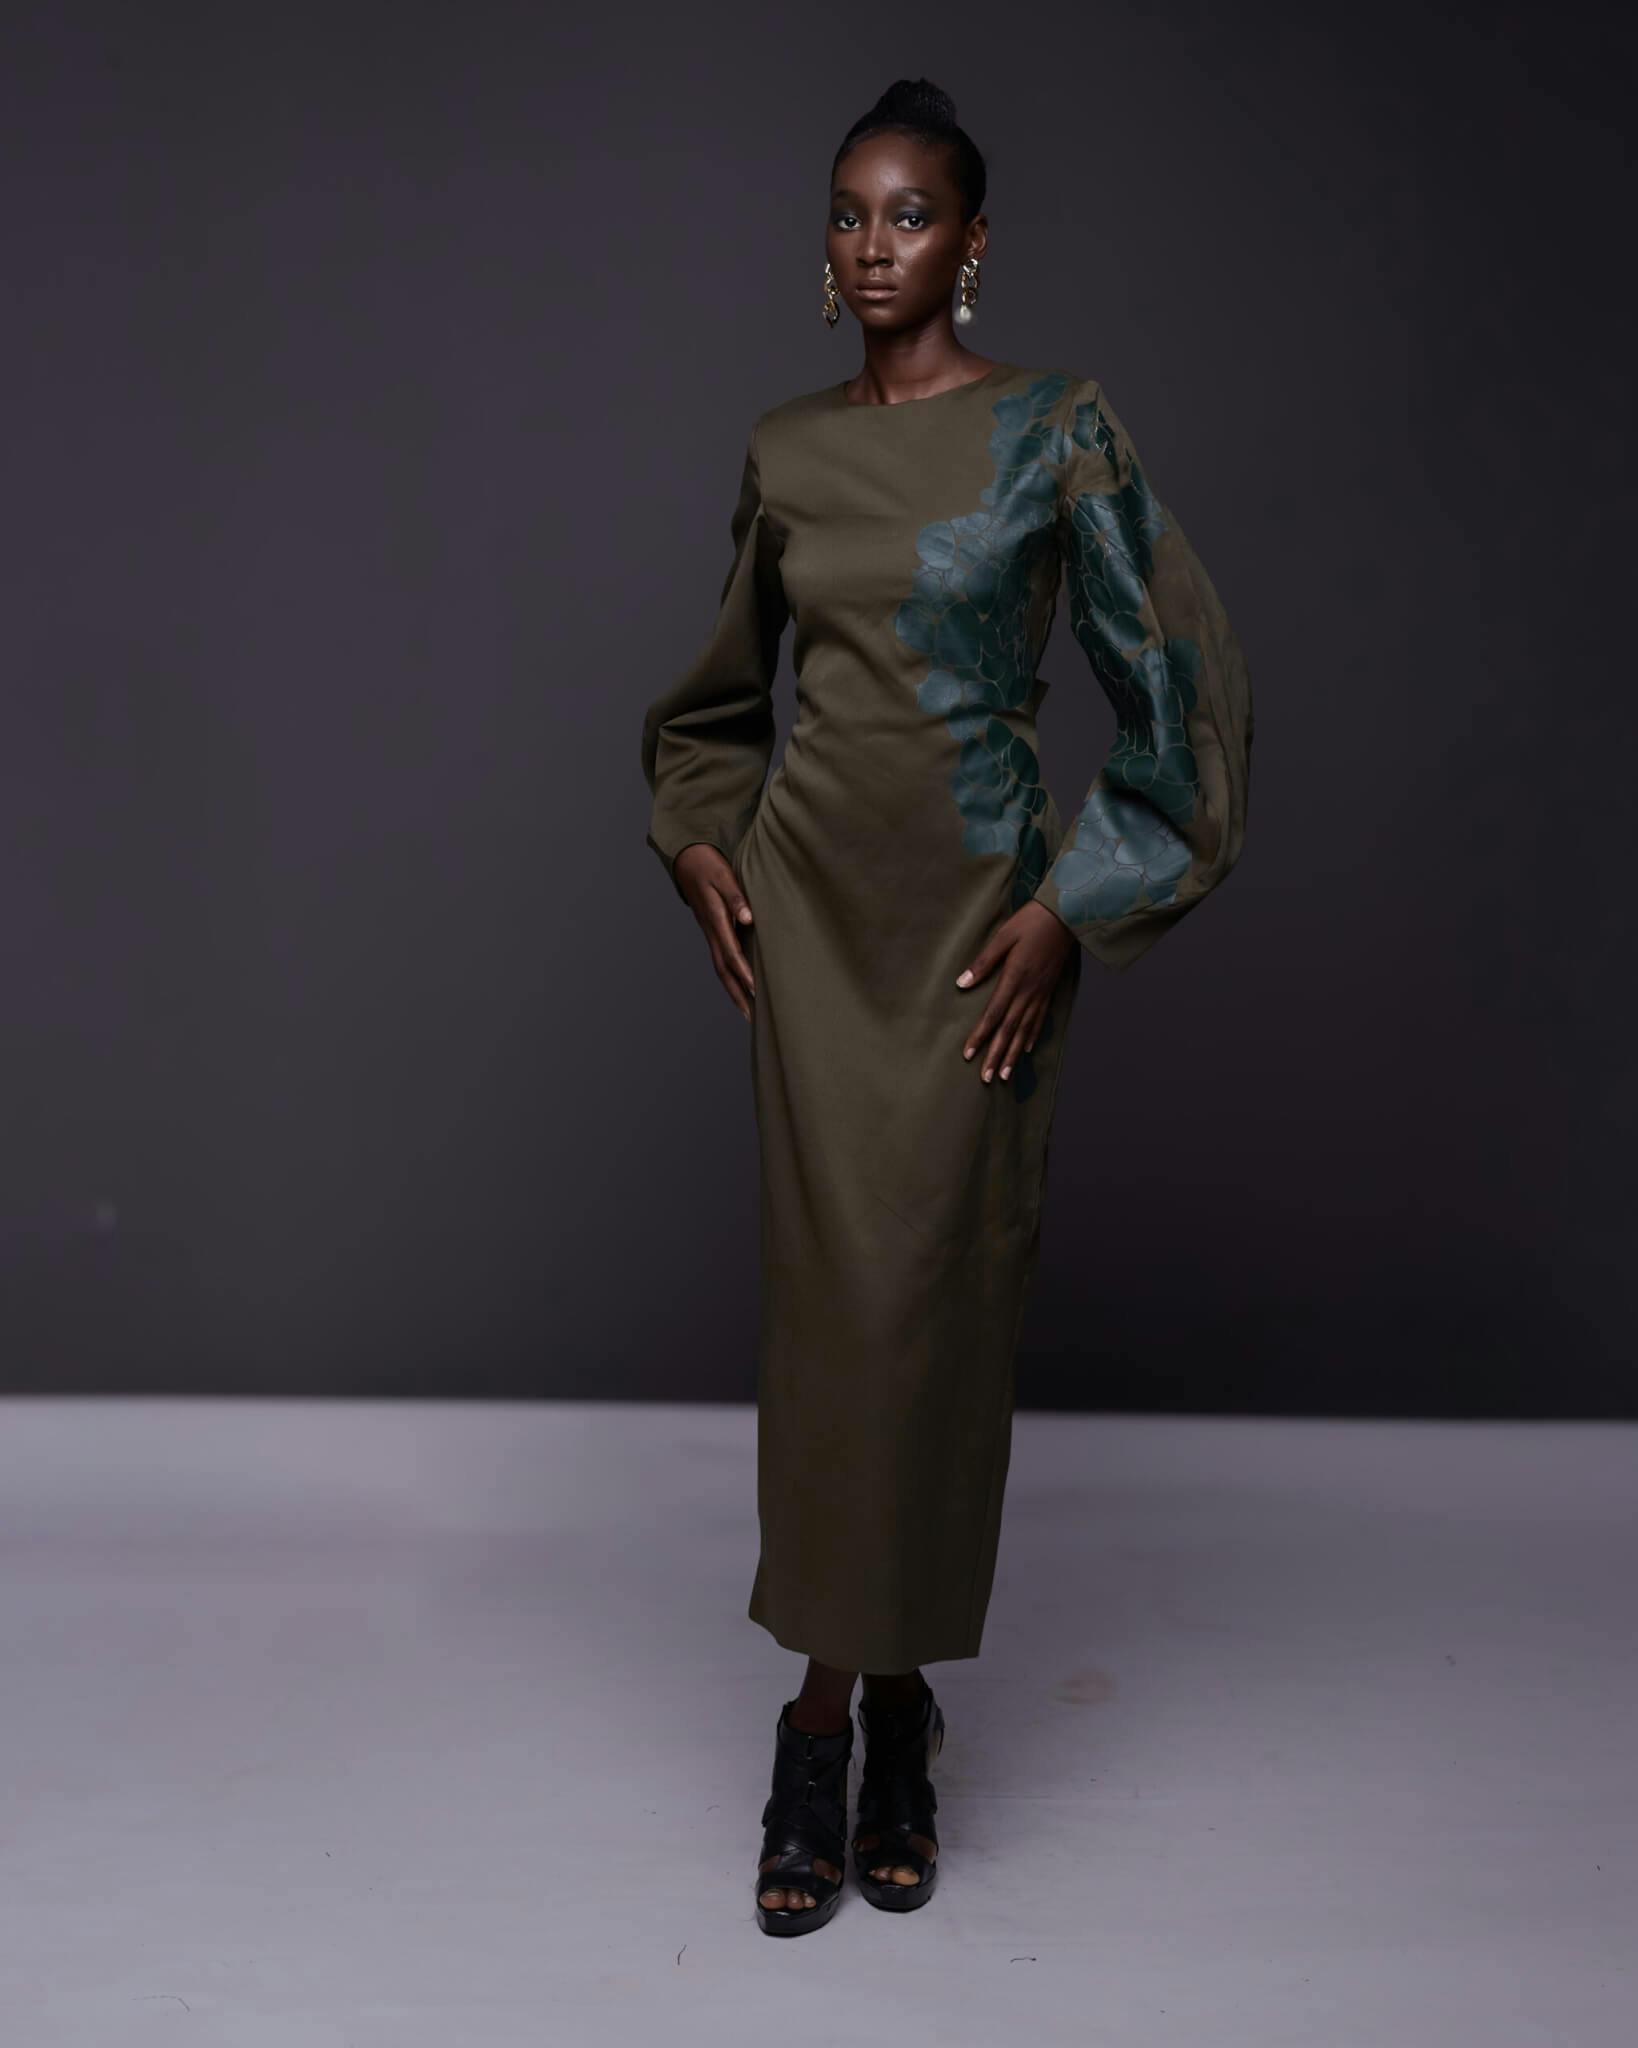 The Deddeh dress, a product by Joseph Ejiro